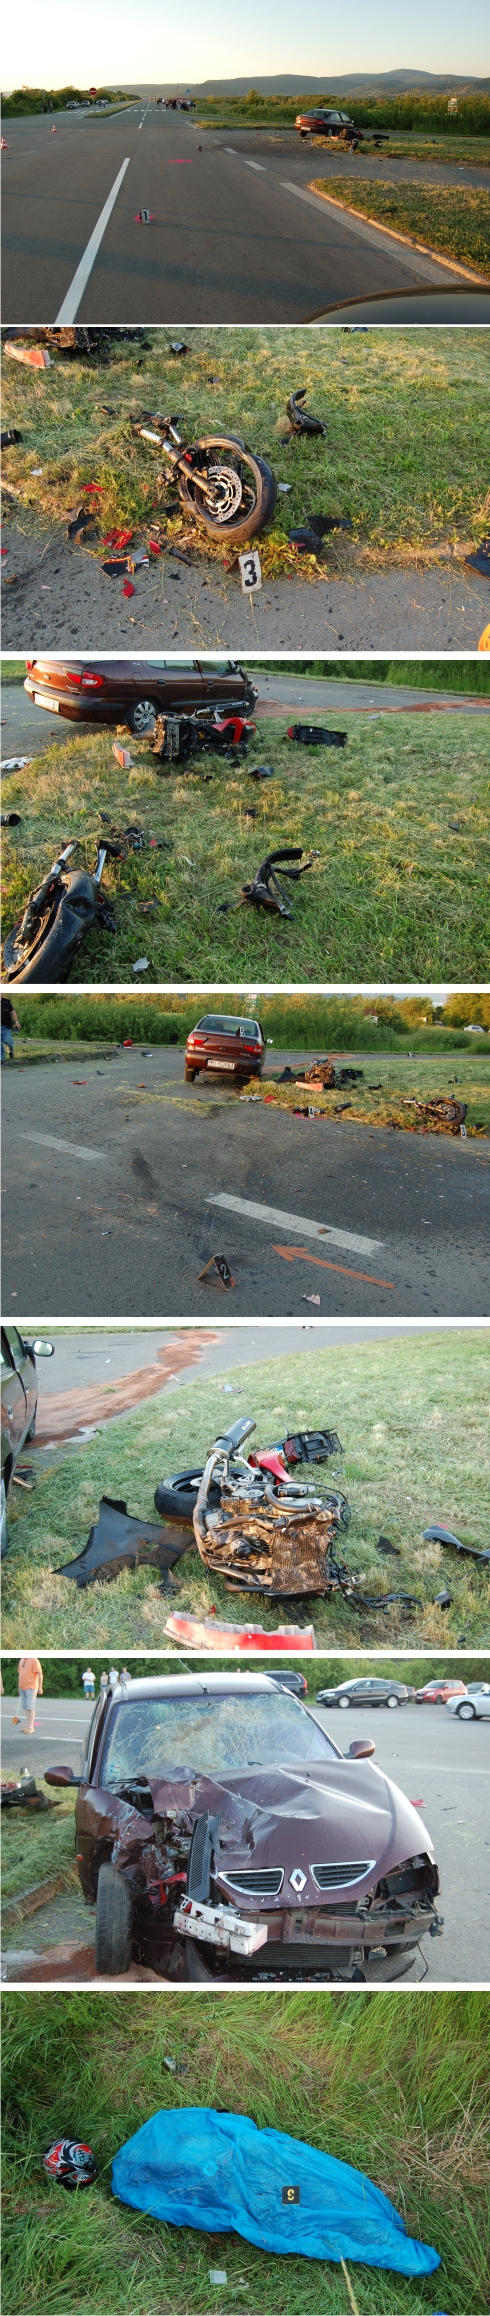 tragická nehoda motocyklistu